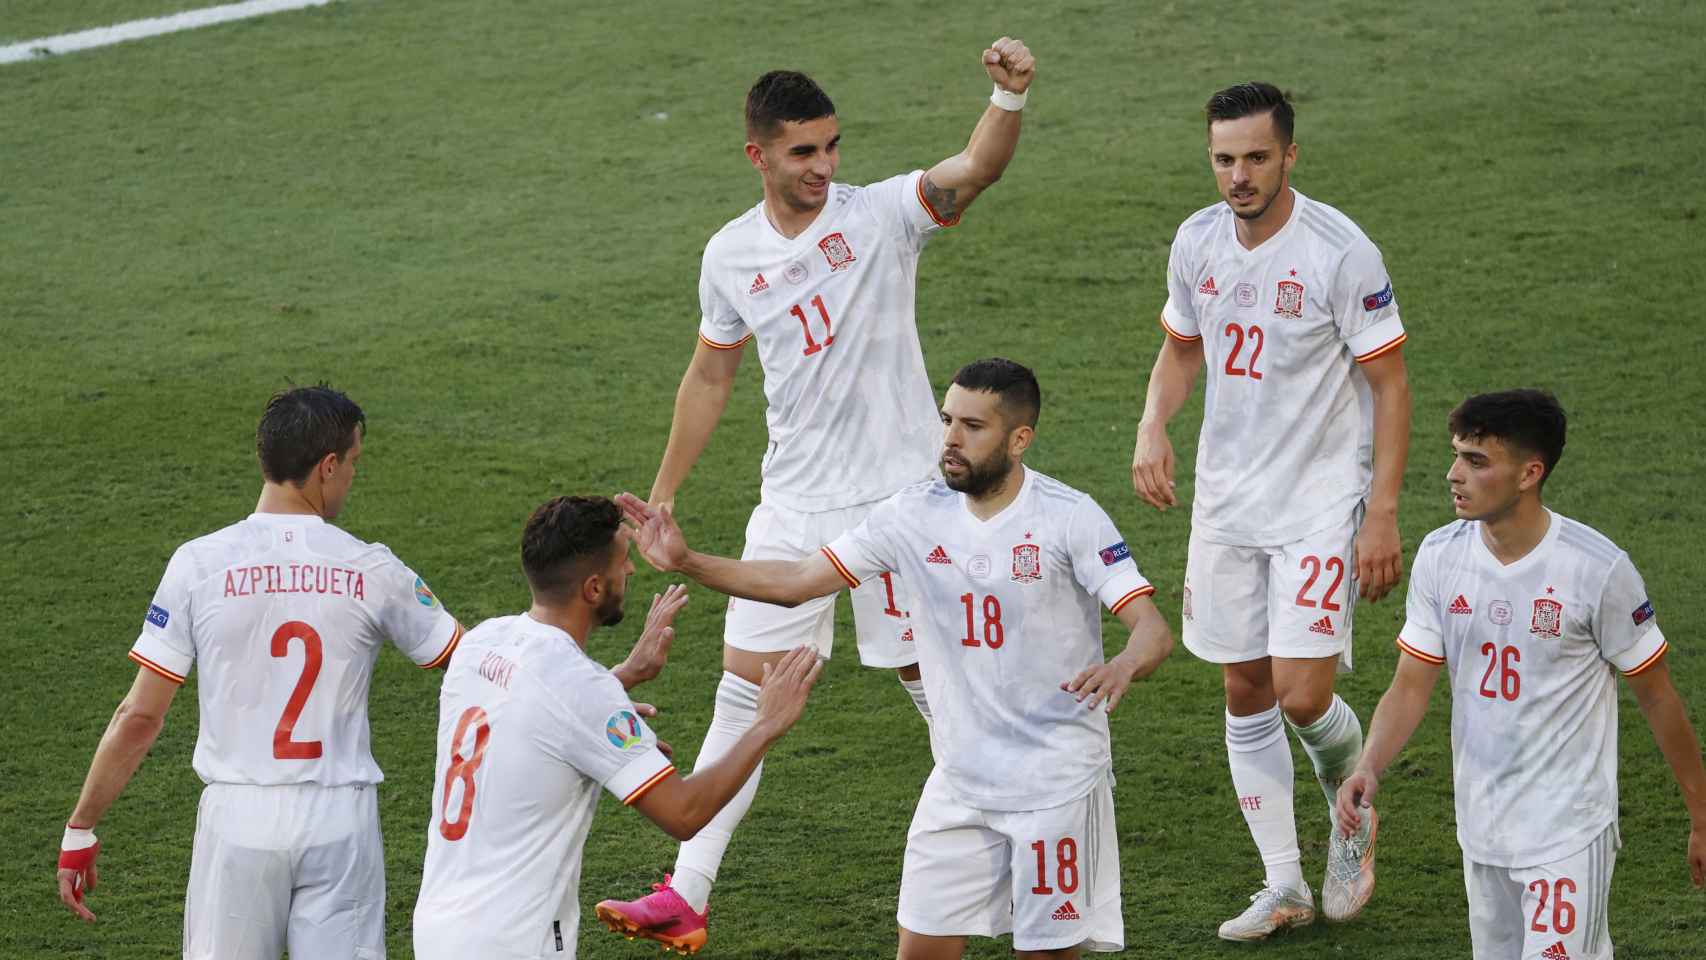 Ferrán Torres marca el cuarto gol de España a Eslovaquia